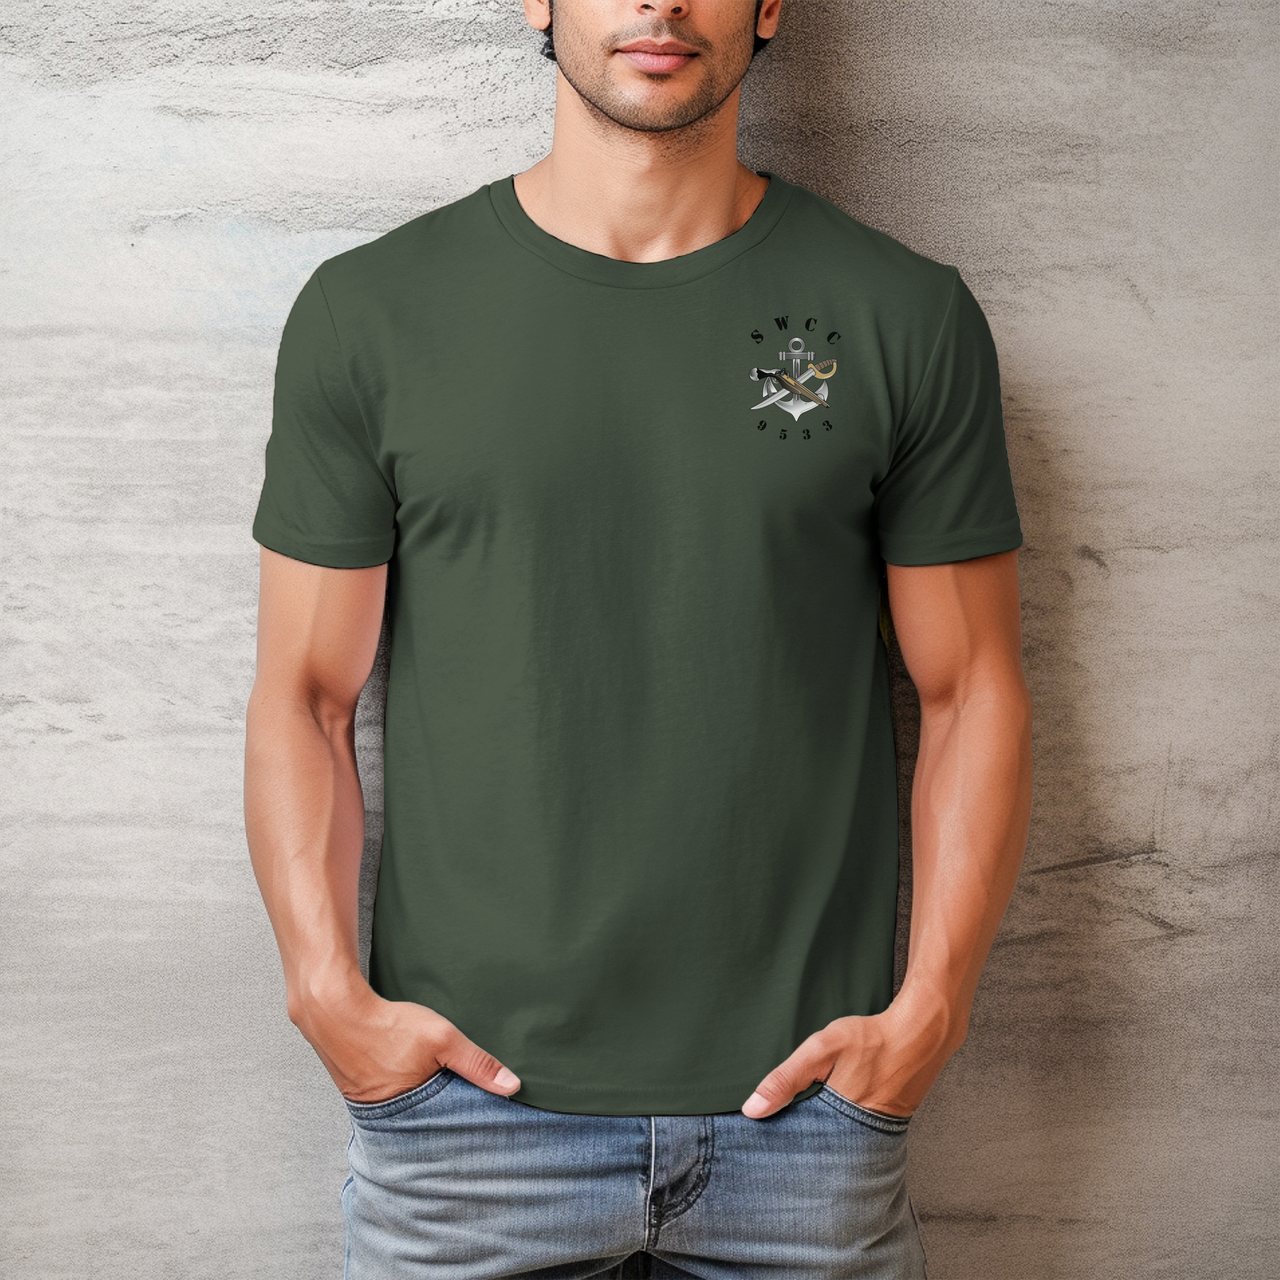 Special Warfare Combatant Craft Crewmen, 9533, T-Shirt (Color)